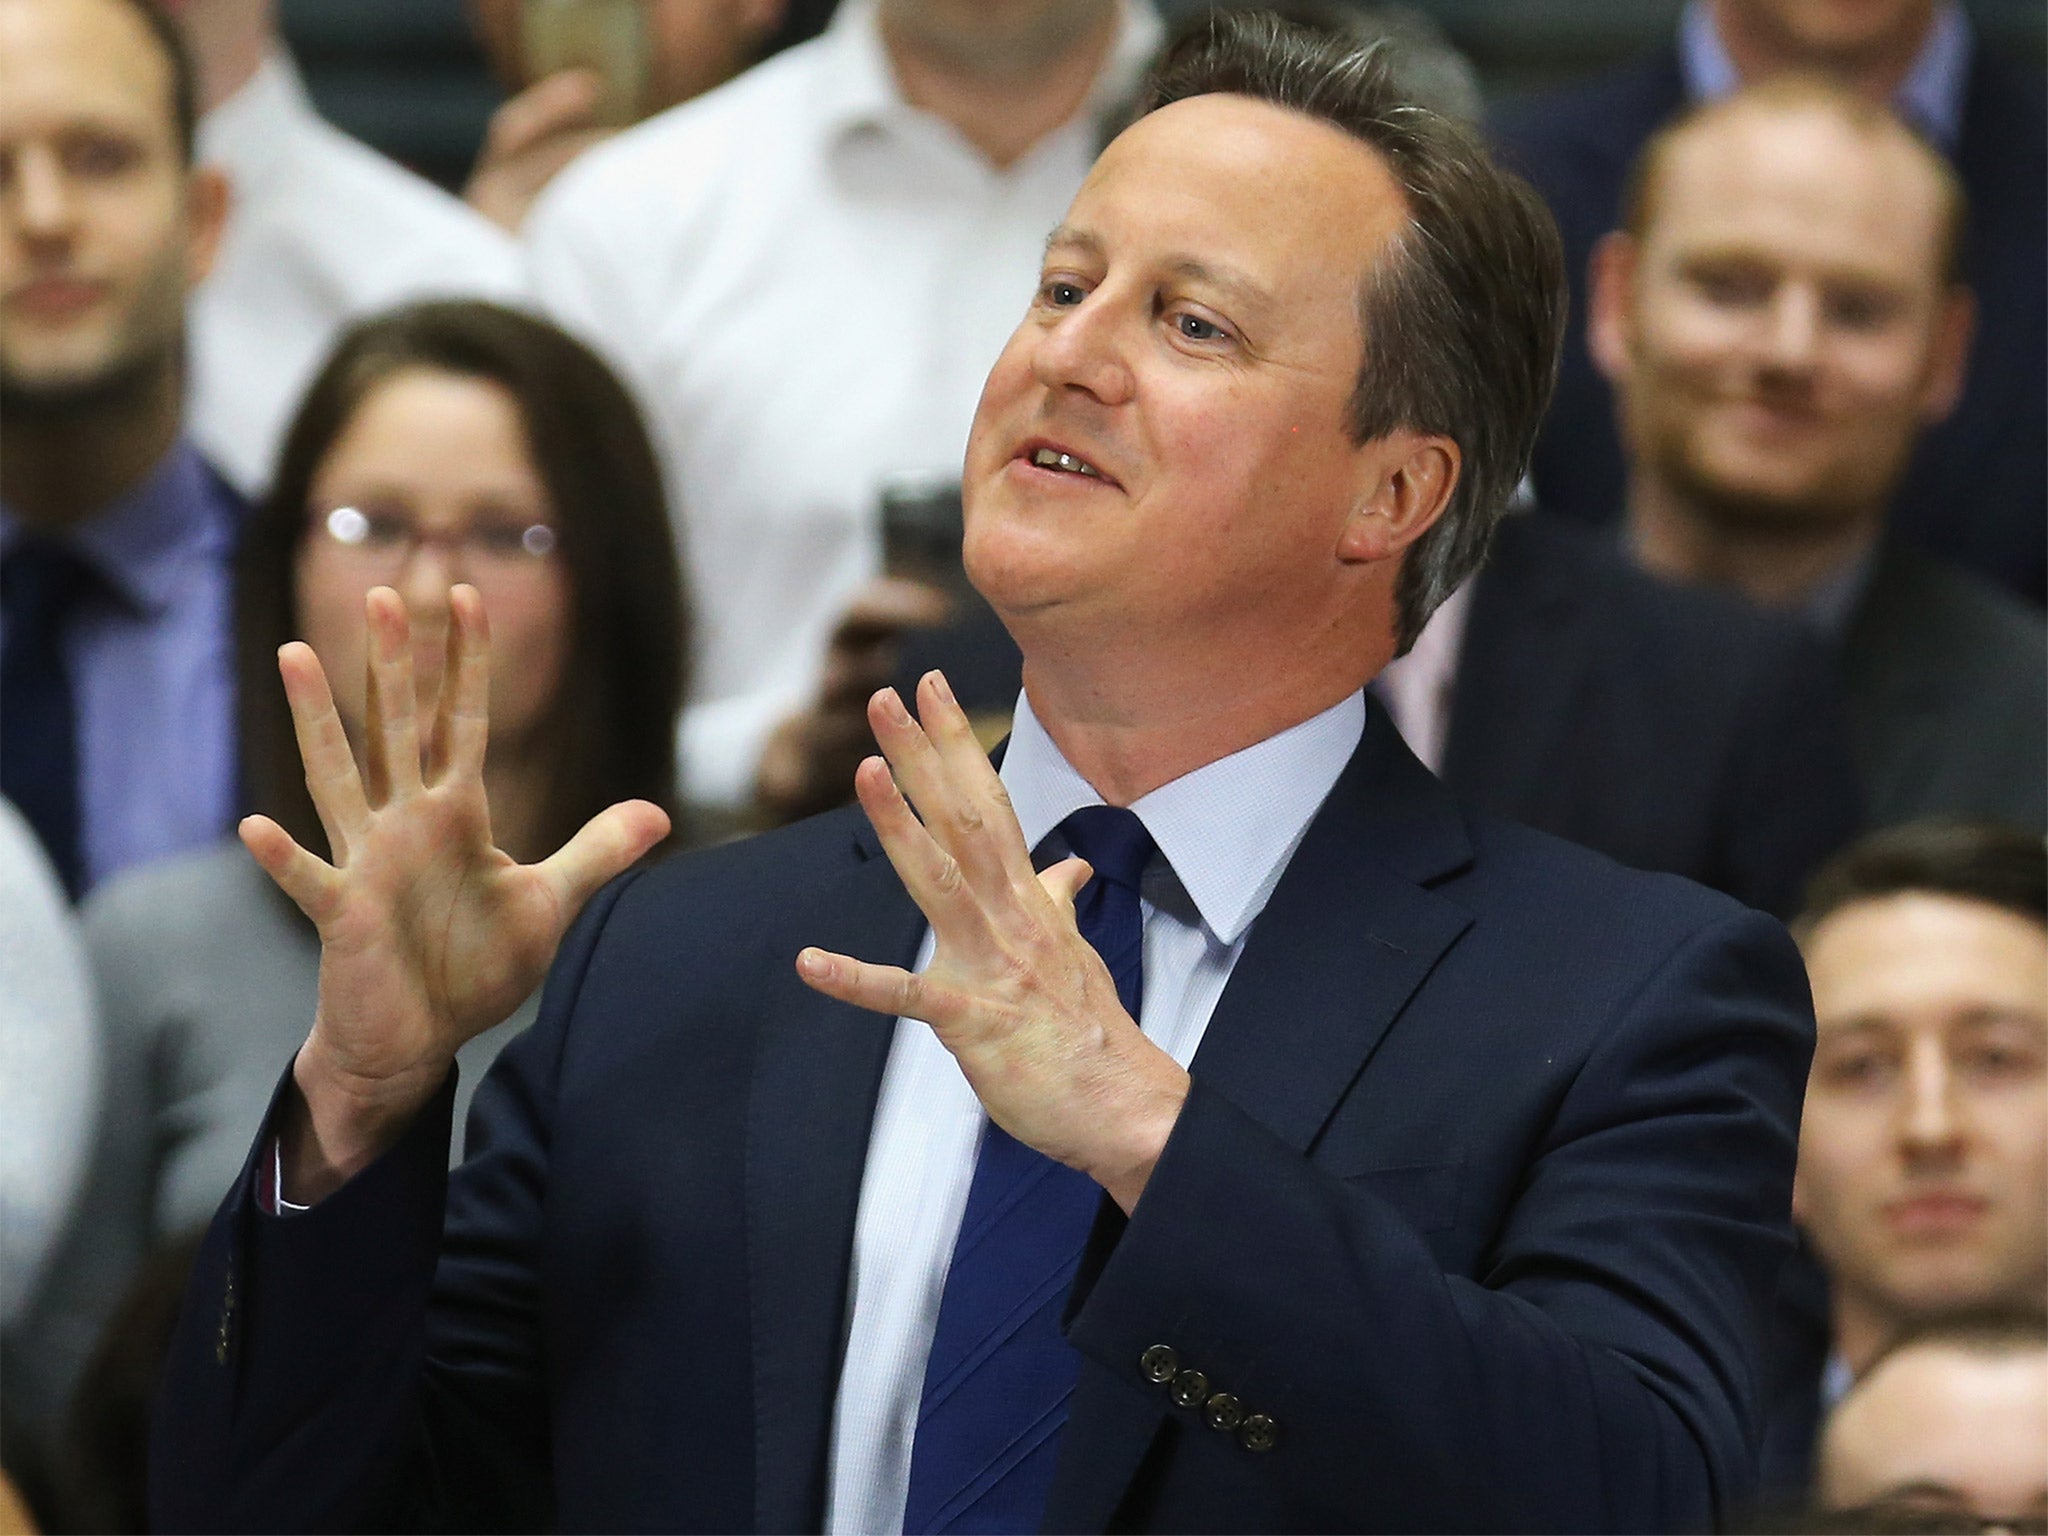 David Cameron speaking in Birmingham on Tuesday